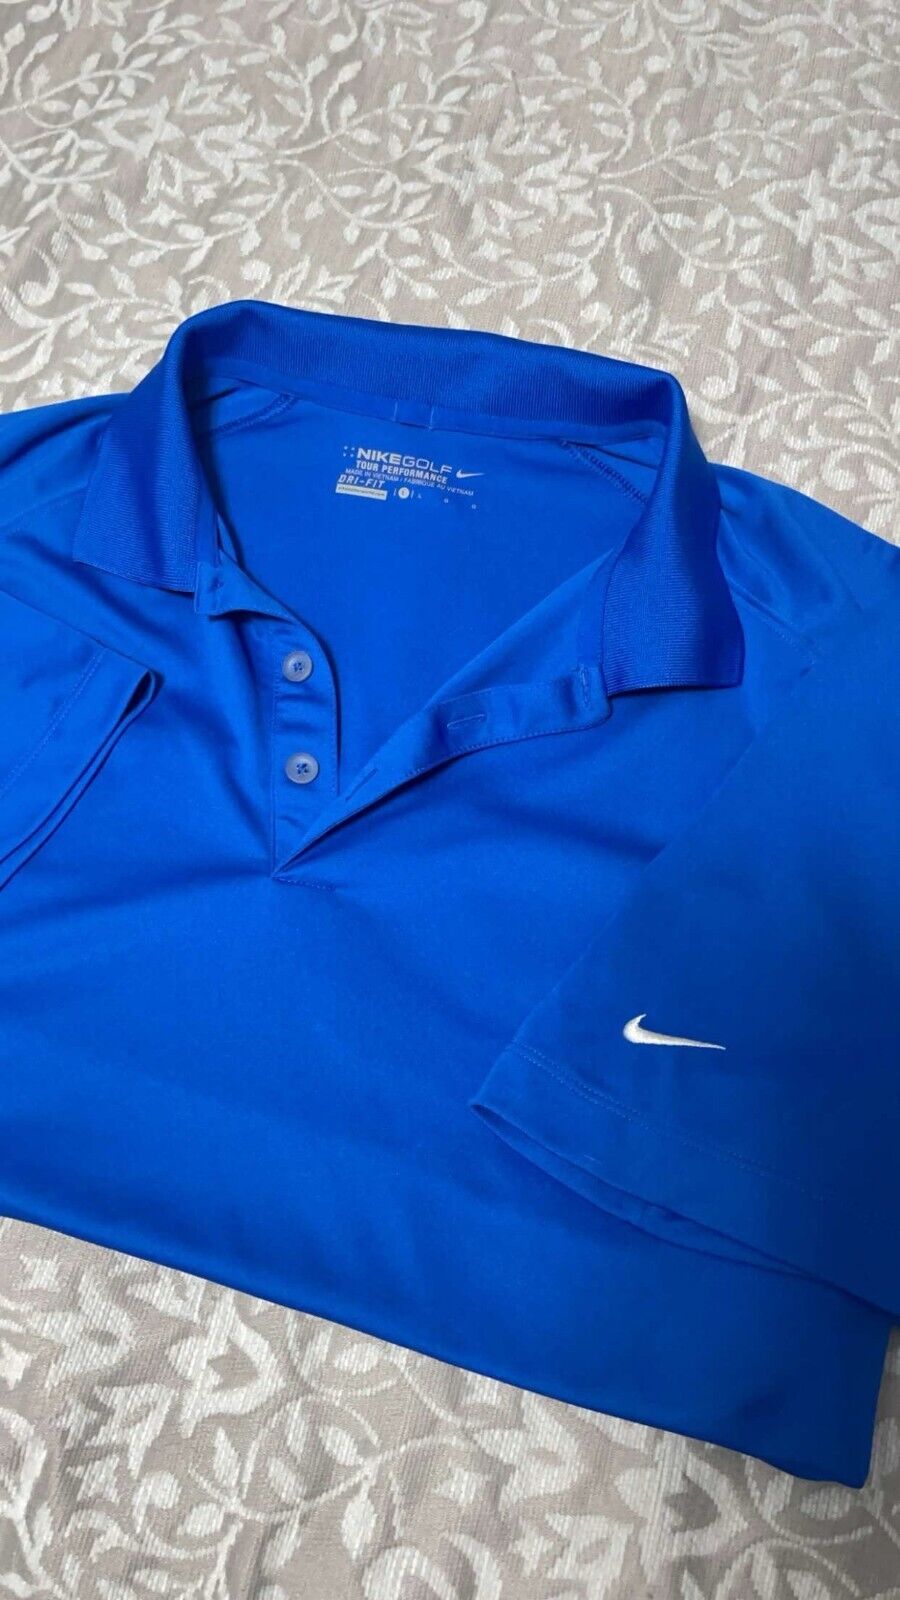 Nike Golf Tour Performance Dri-fit Men’s Solid Blue Polo Nike Check Size Large